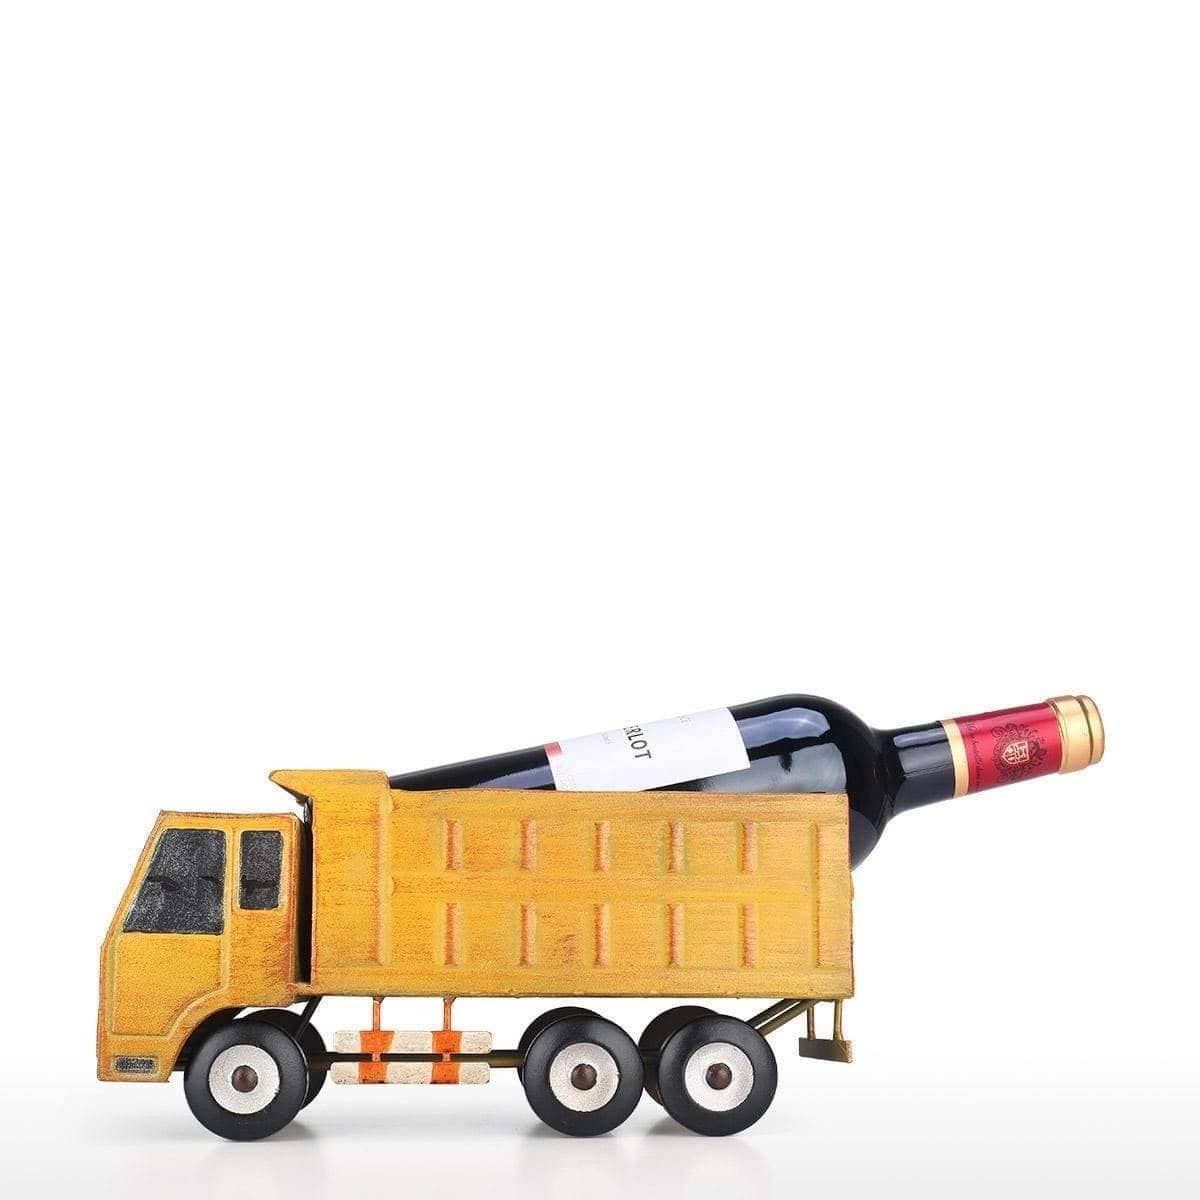 Truck Wine Bottle Holder Rack Stand - Unique & Attractive Table Decor